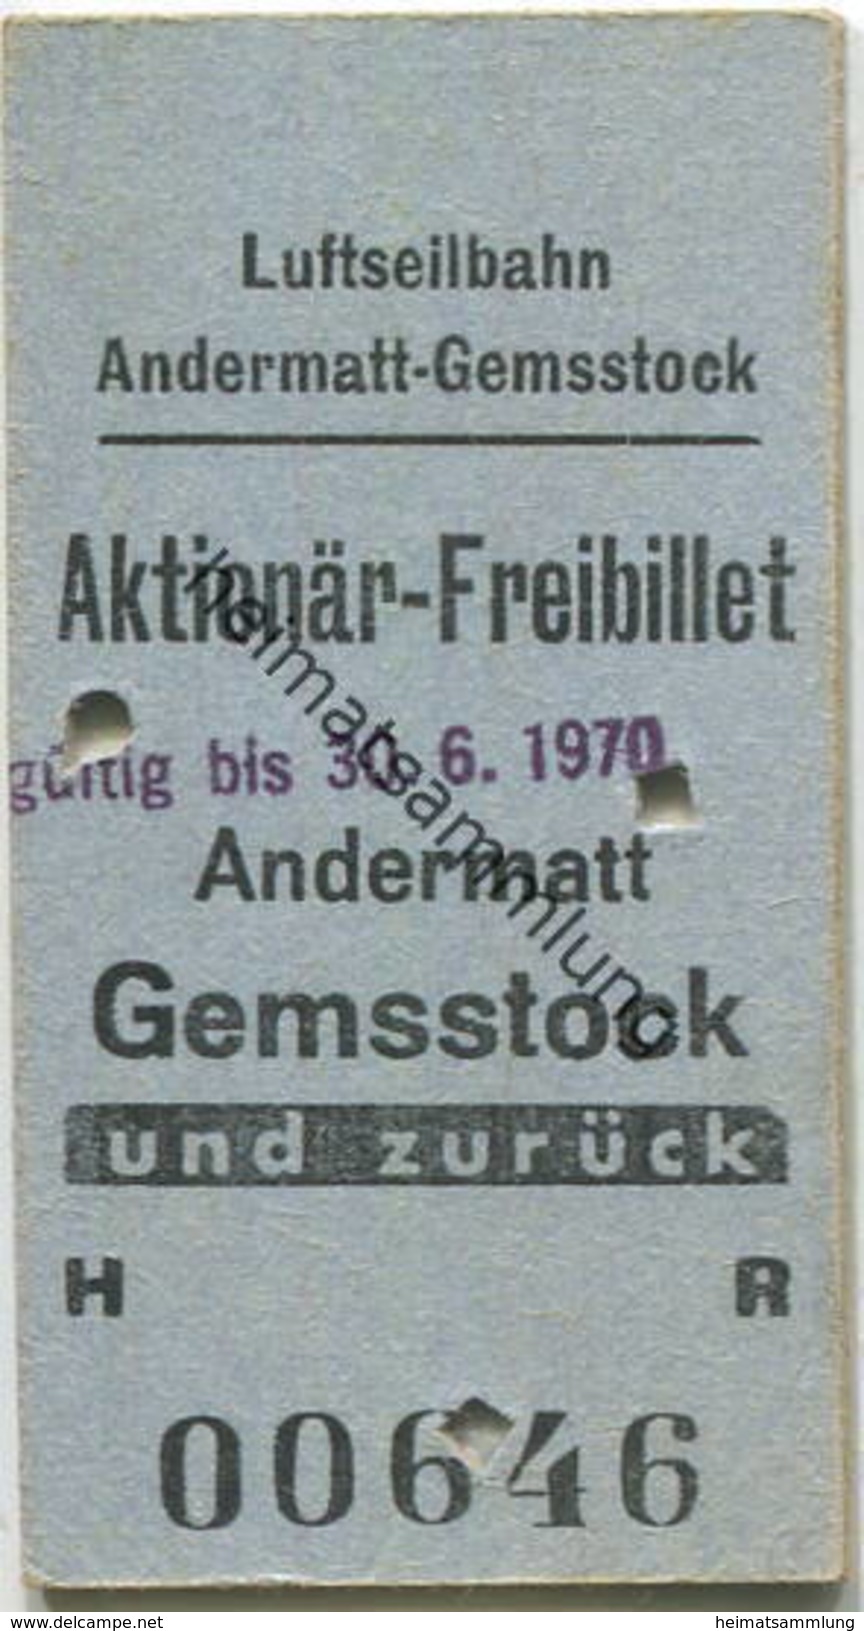 Schweiz - Luftseilbahn Andermatt Gemsstock - Aktionär-Freibillet Gültig Bis 30. 6. 1970 - Europa